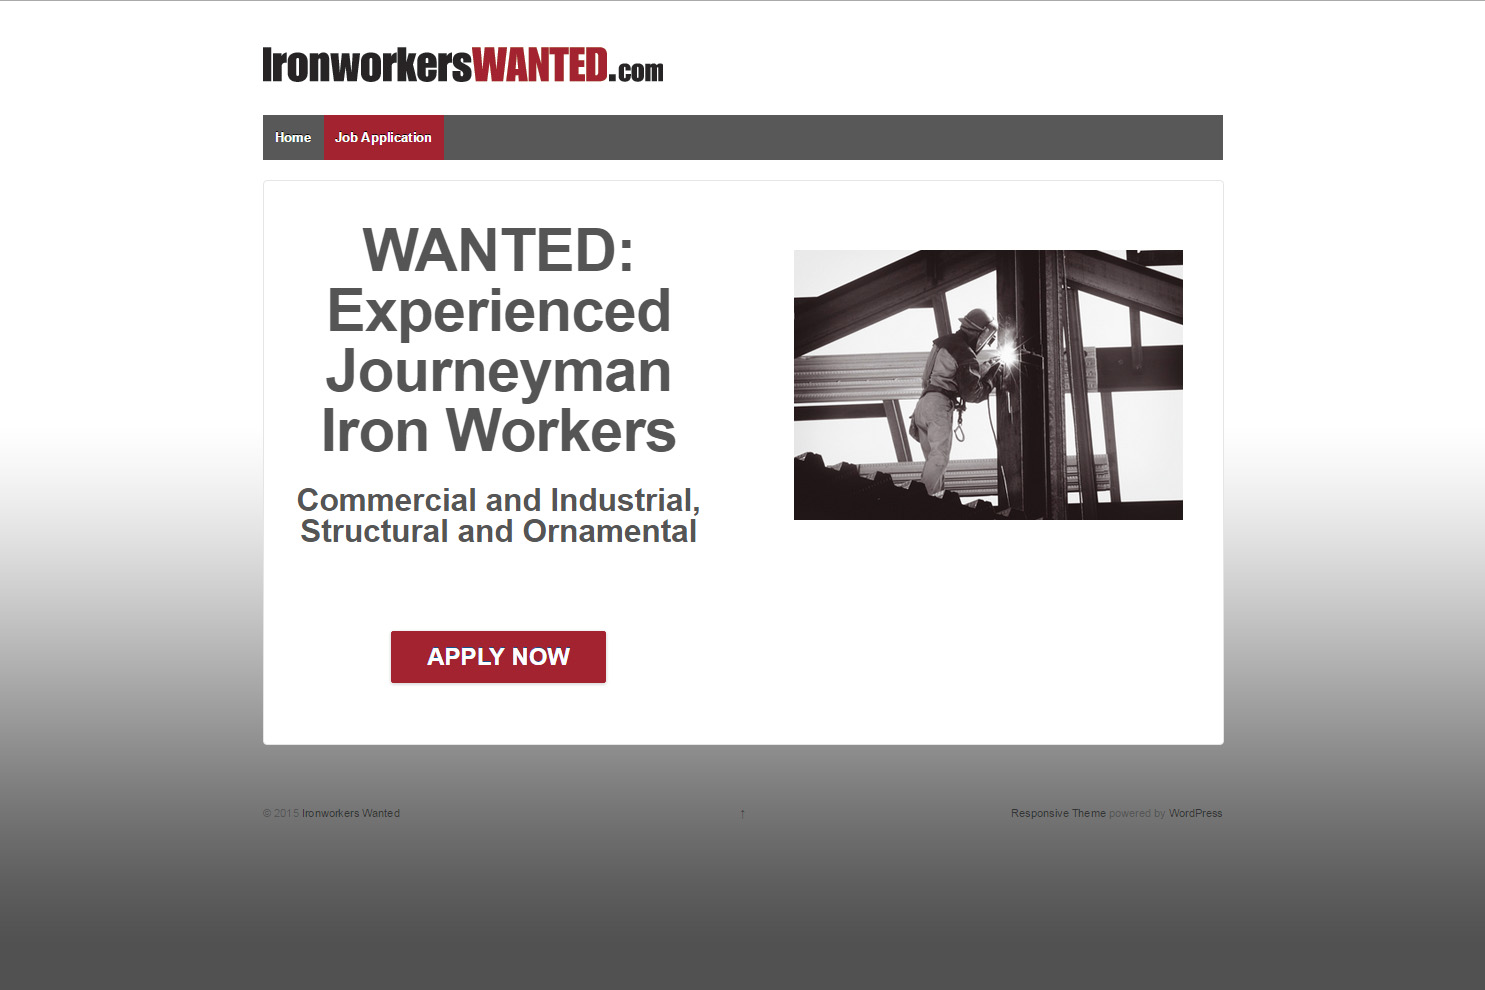 Ironworker Recruitment Website Goes Live